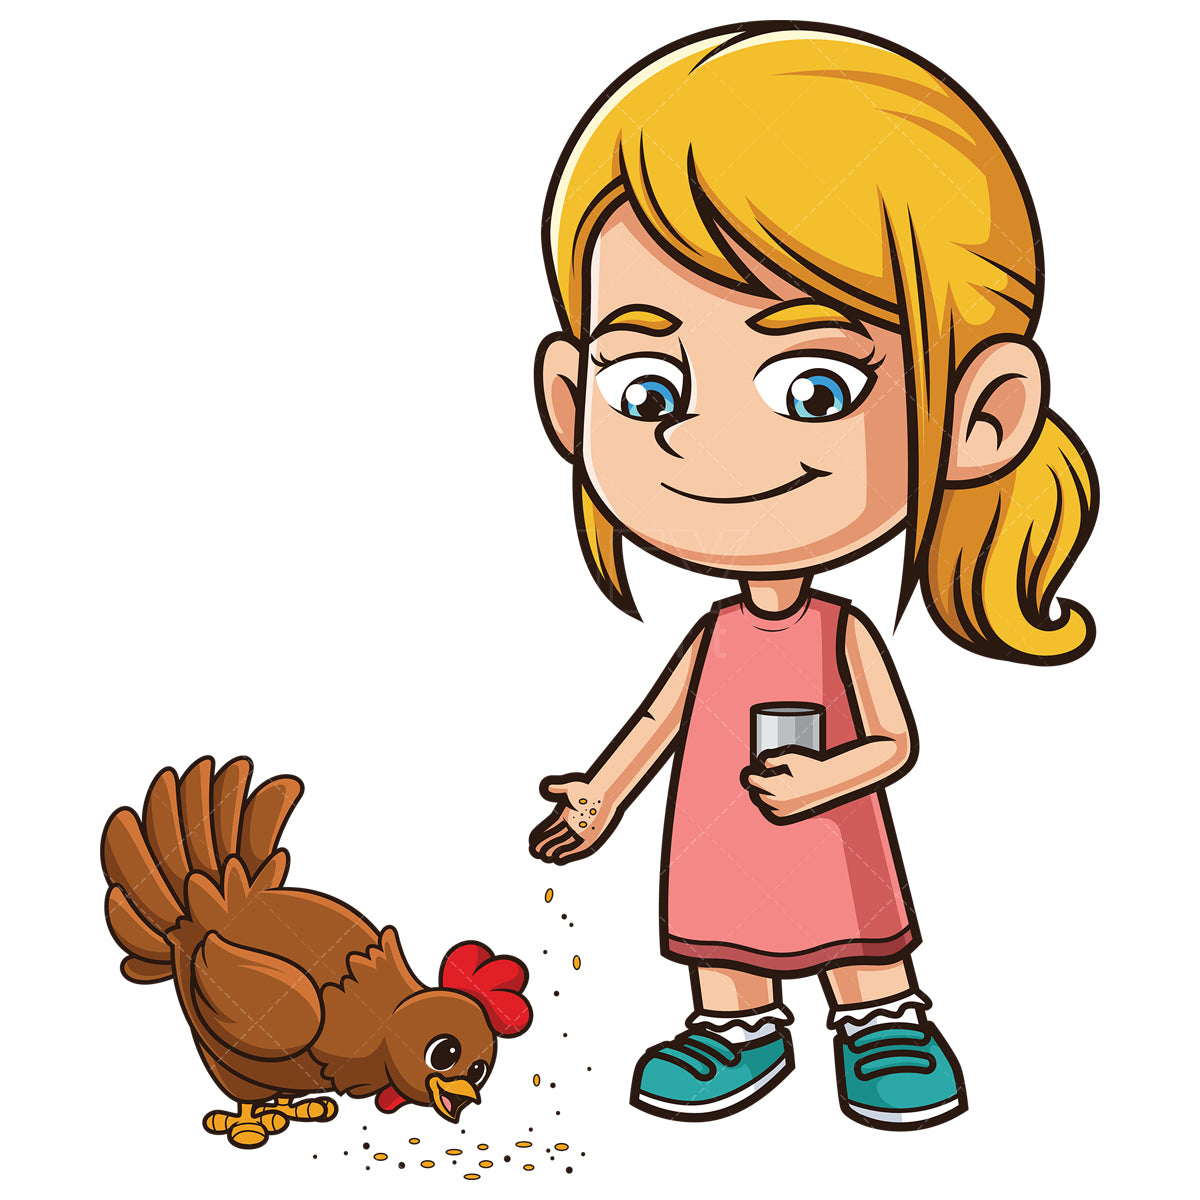 Royalty-free stock vector illustration of a caucasian girl feeding hen.